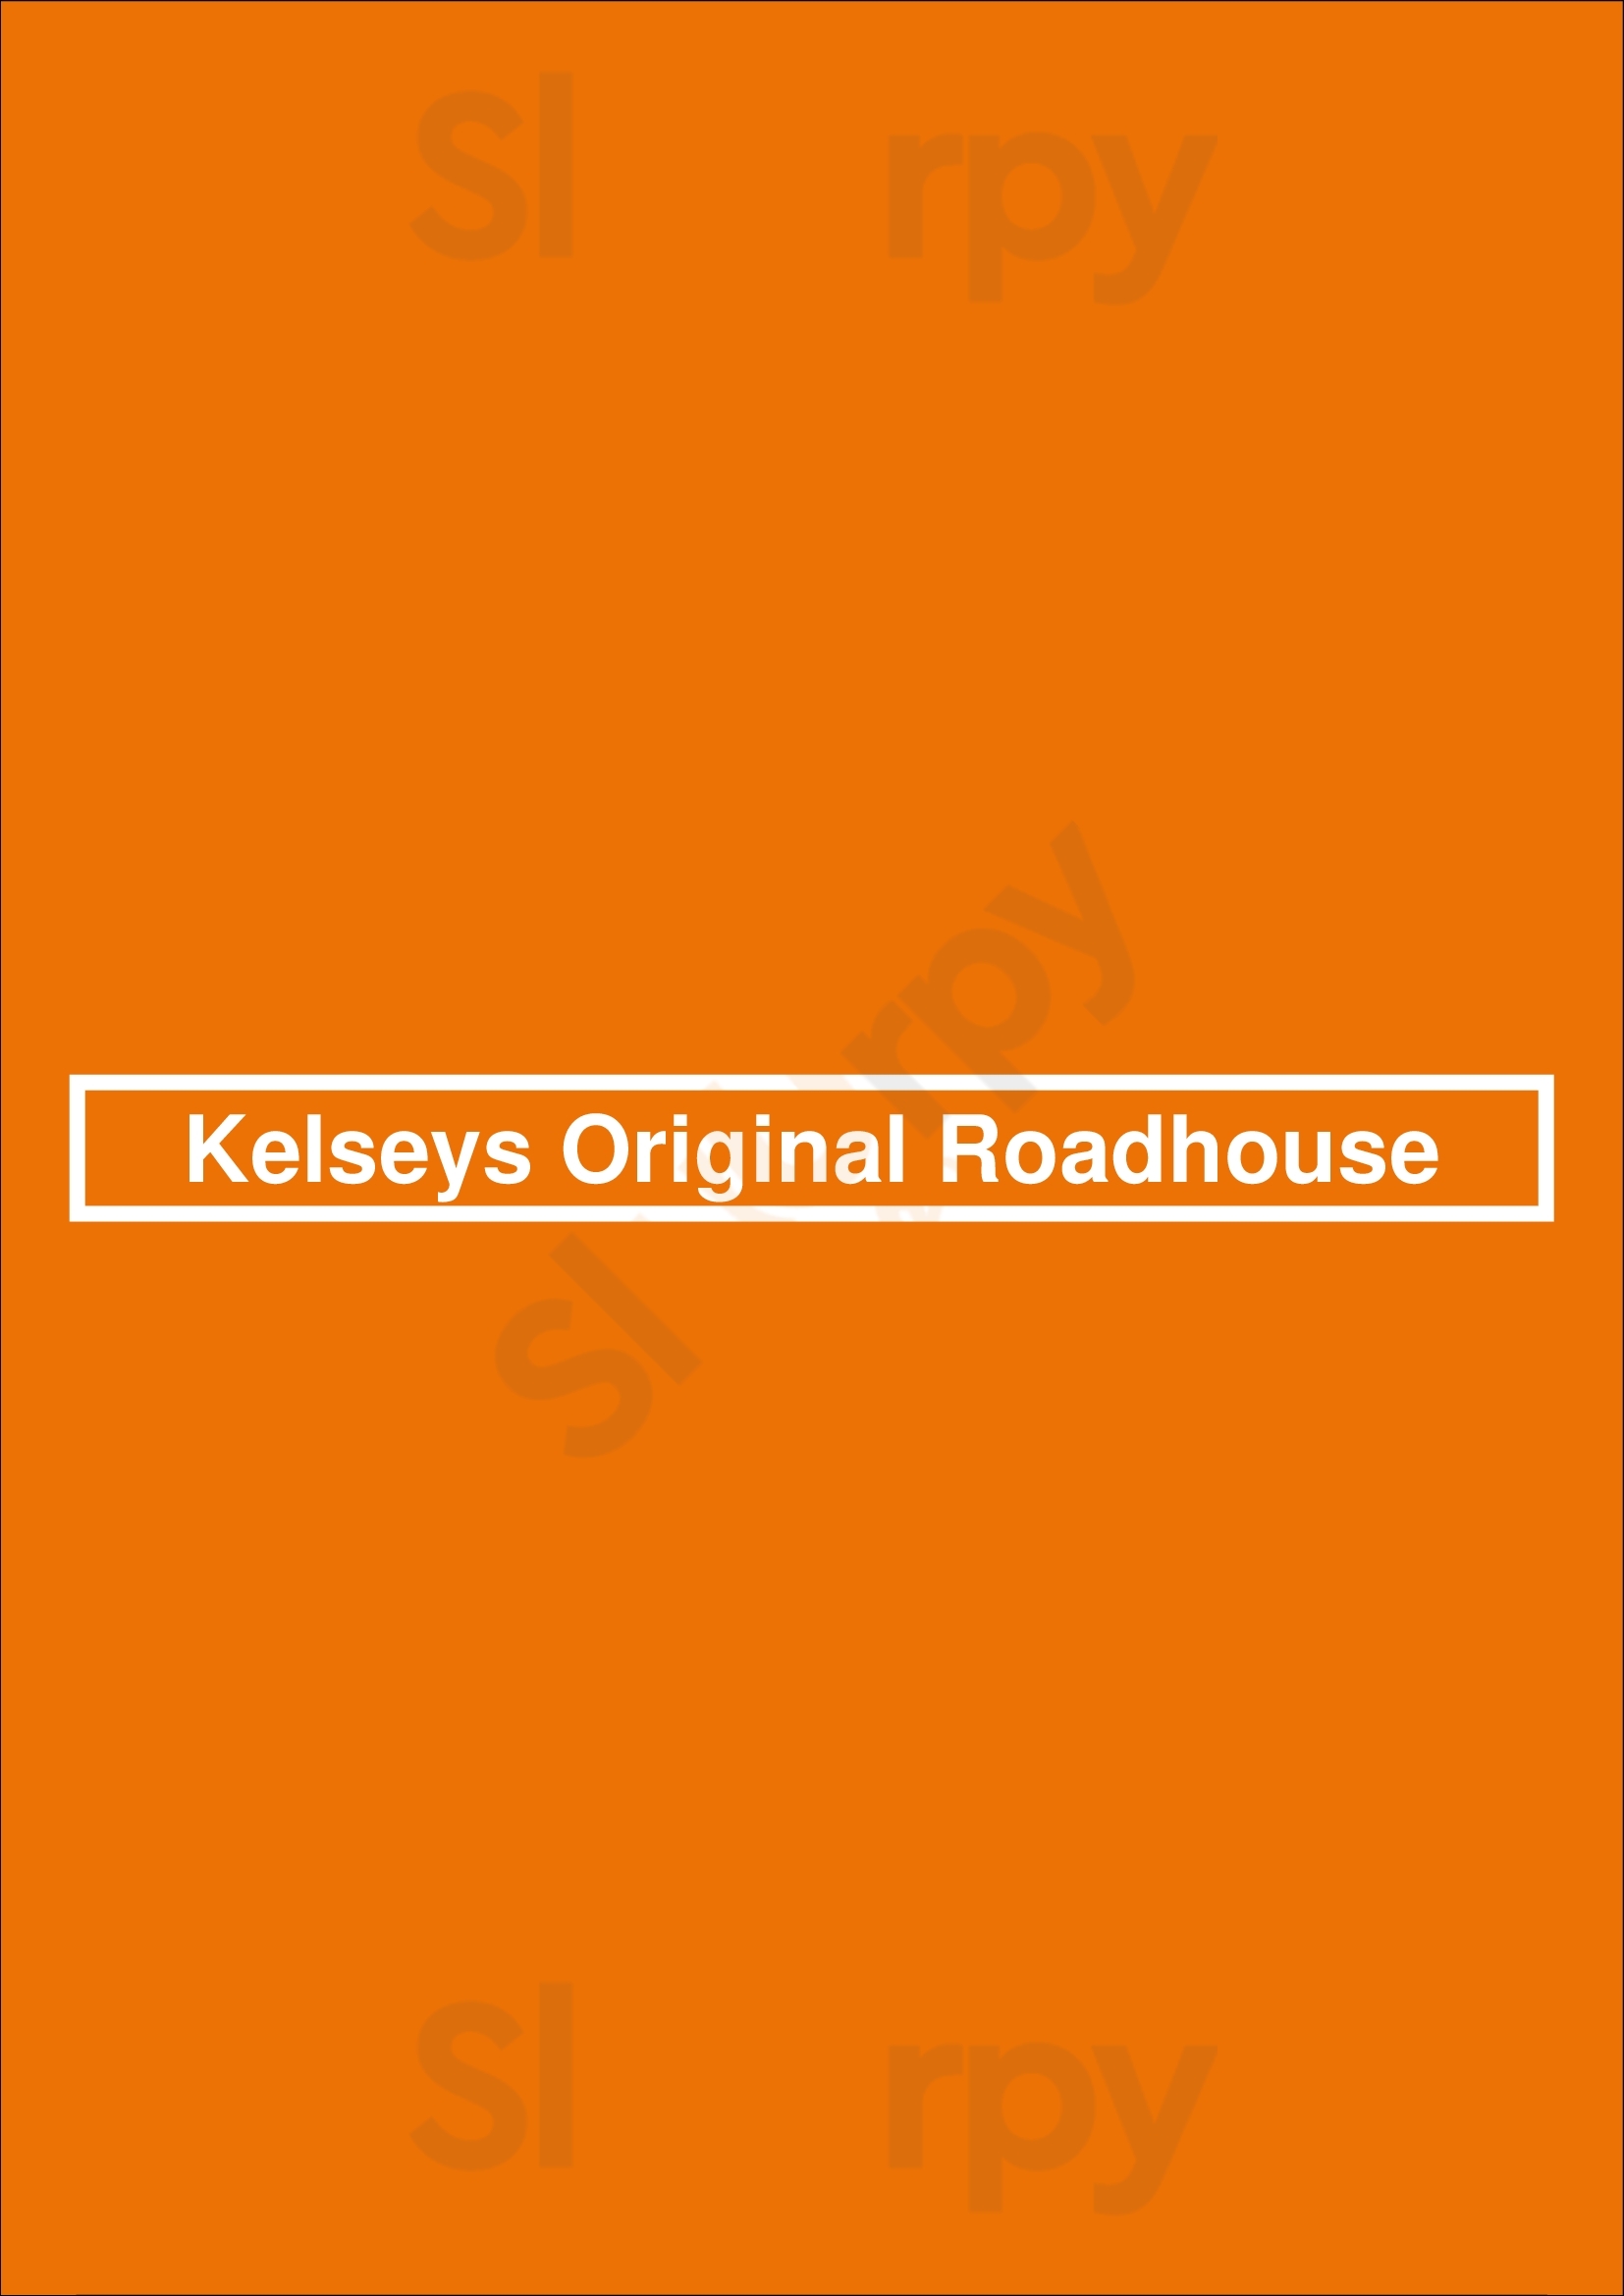 Kelseys Original Roadhouse Kingston Menu - 1